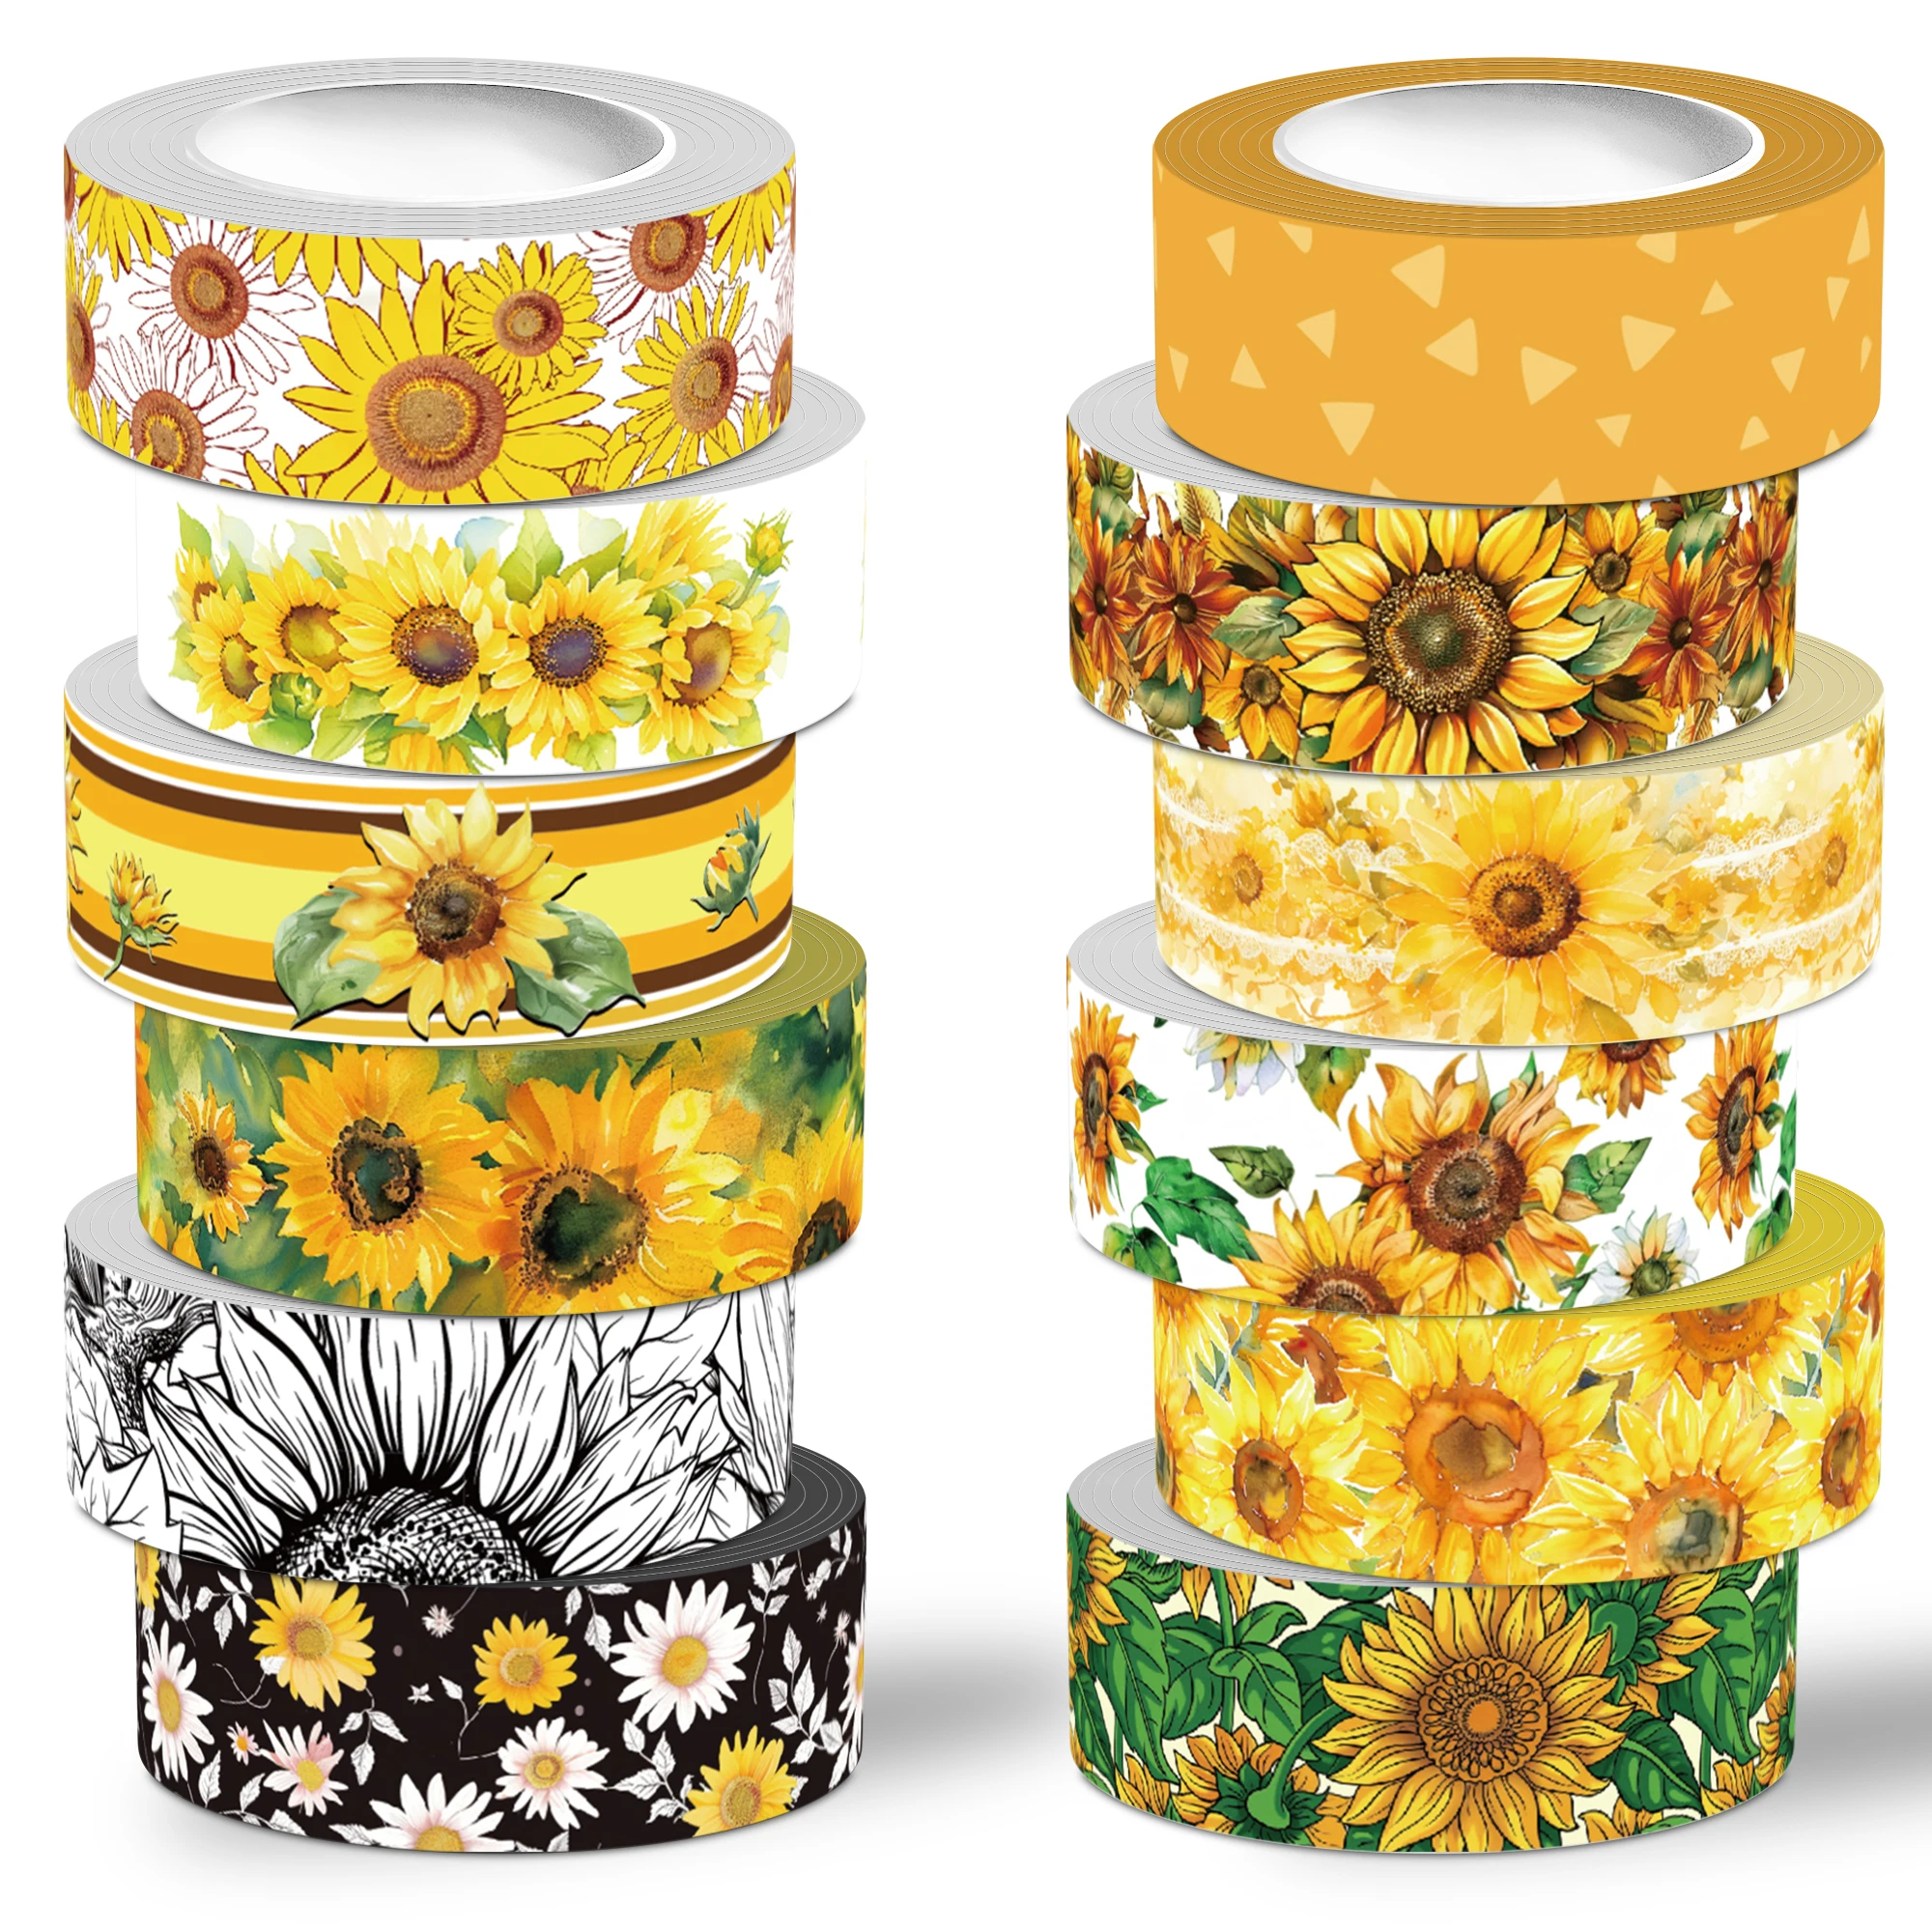 

Sunflower Washi Tape Set, 12 rolls of sunflower decorative tape, Washi tape for note taking supplies, scrapbooking, DIY crafts